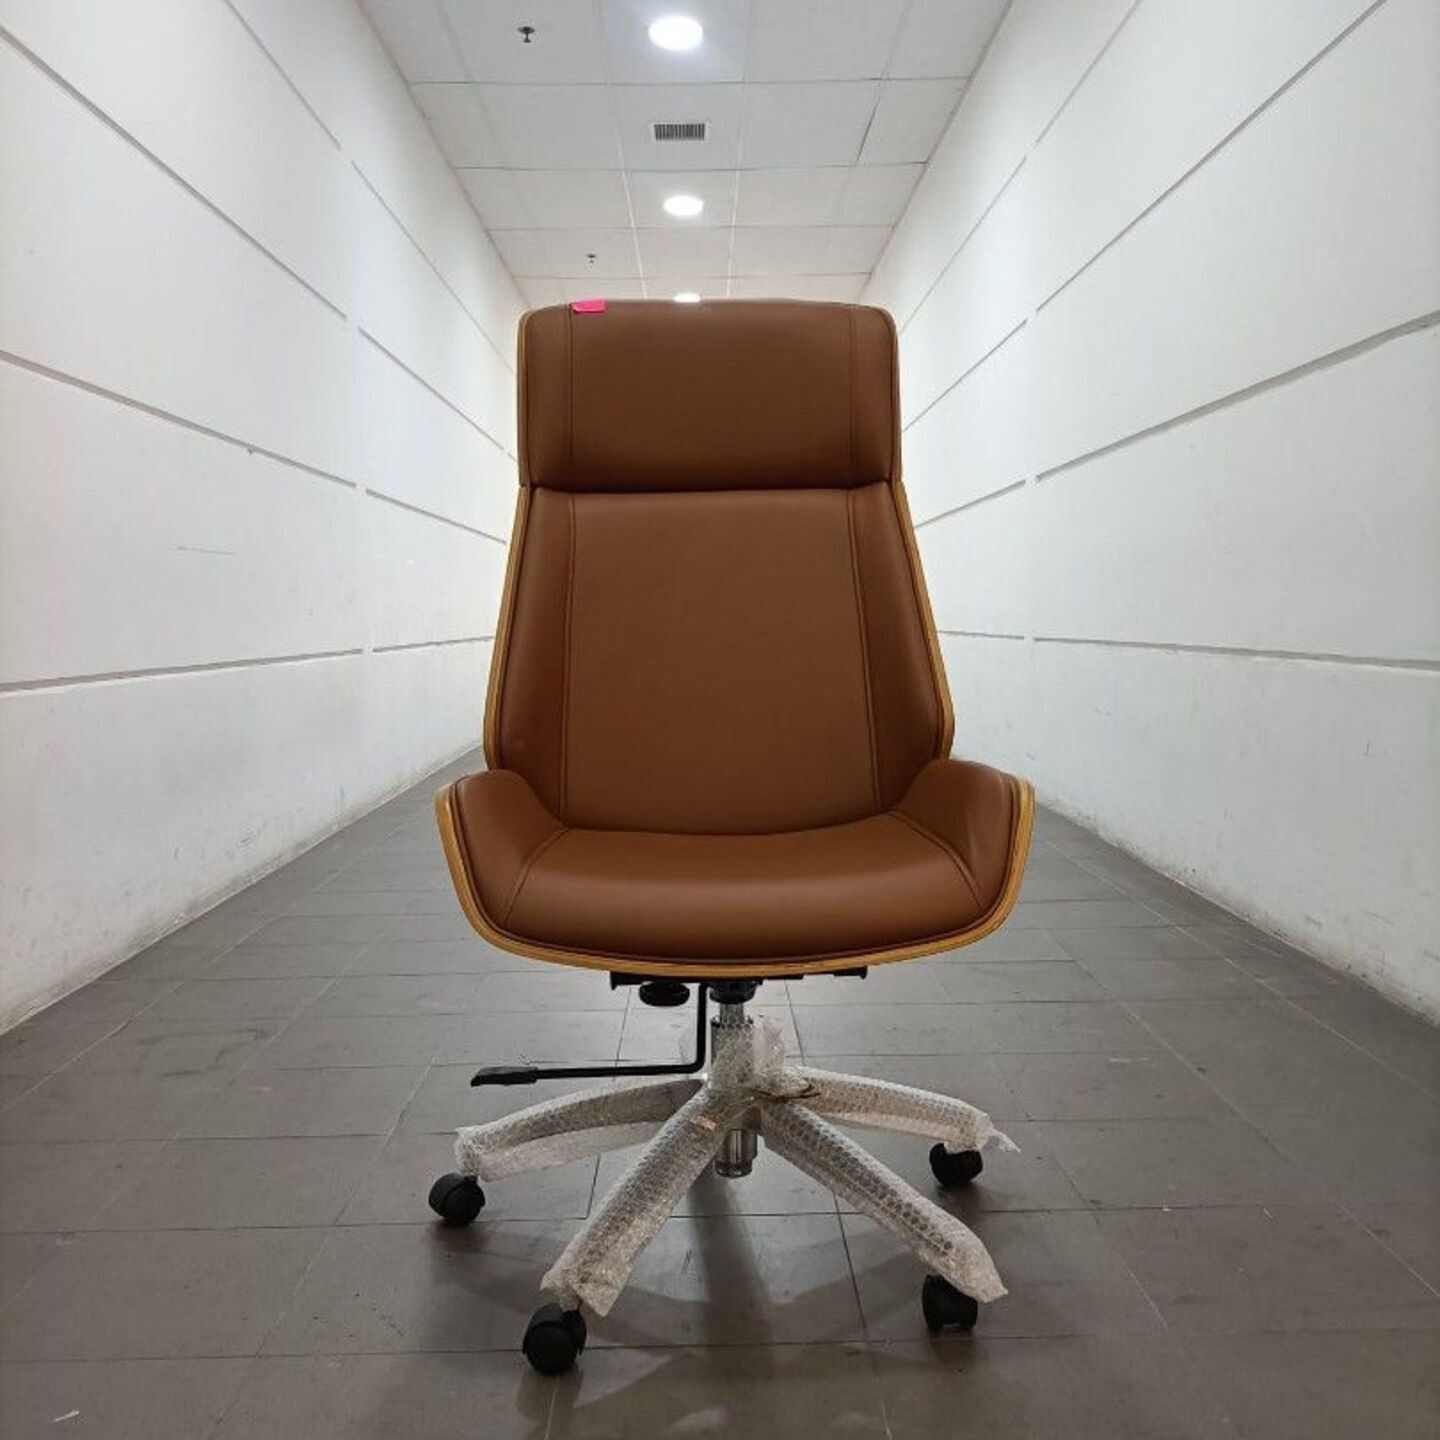 COBERT Office Chair in TAWNY